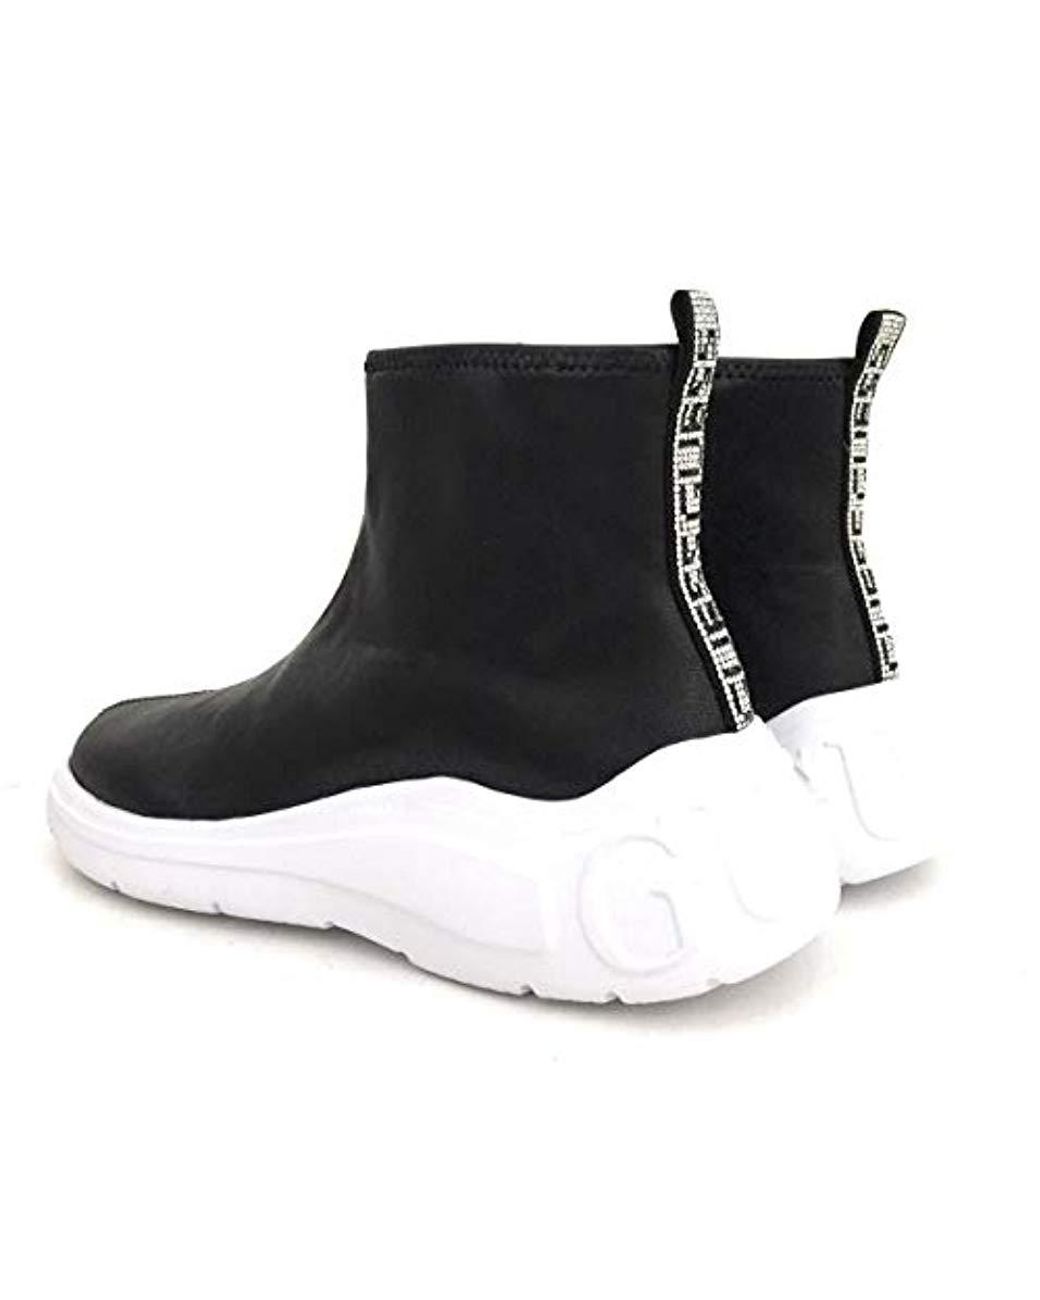 Scarpe Donna Guess Sneaker Puxly in Tessuto/Ecopelle Scamosciata Beige/Brown DS20GU13 